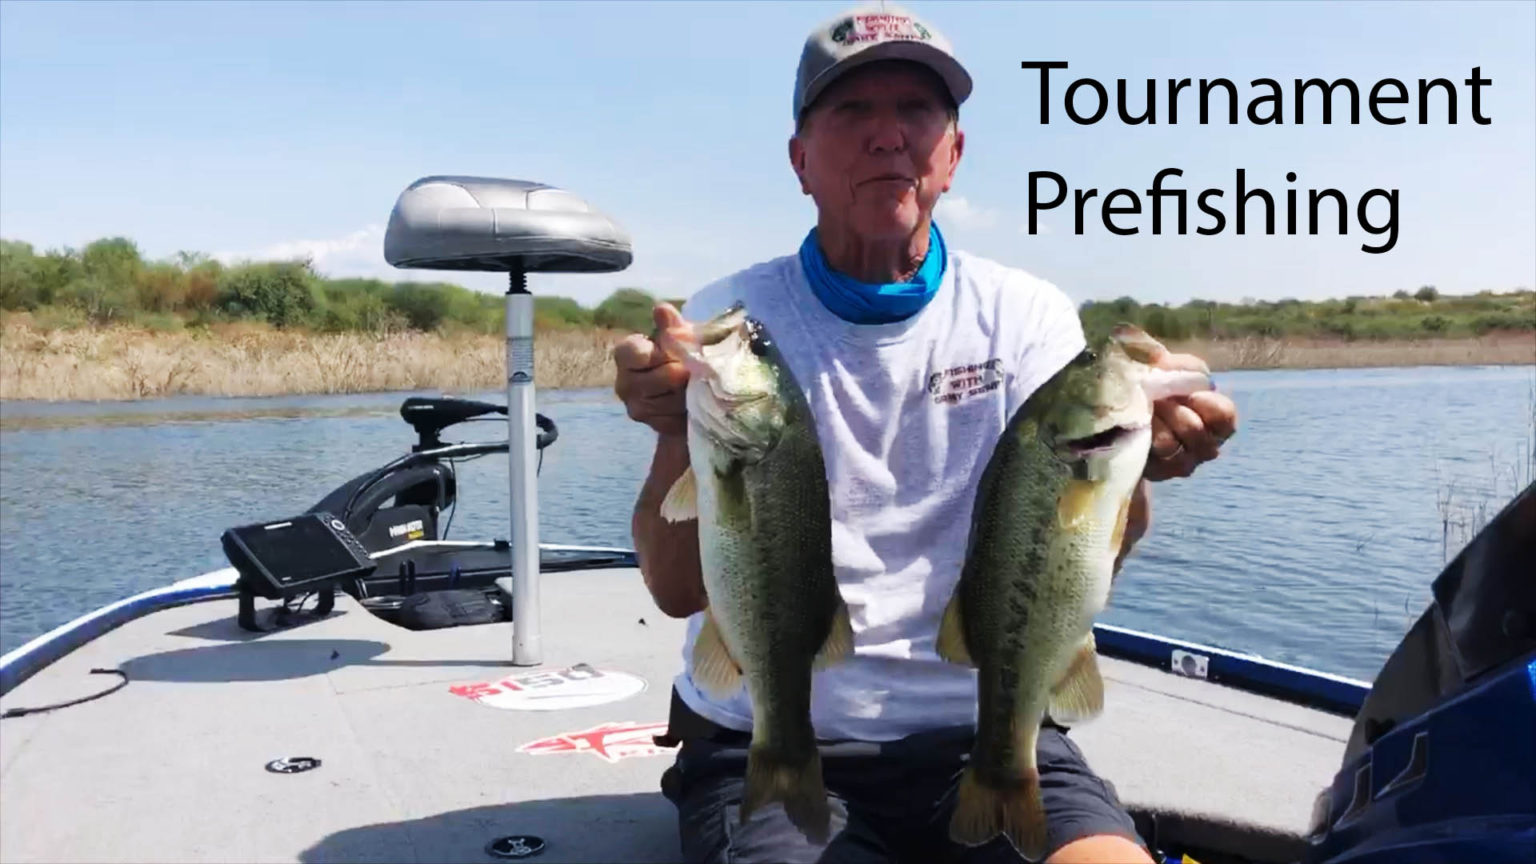 Tournament Prefishing at Roosevelt Gary Senft Fishing Arizona